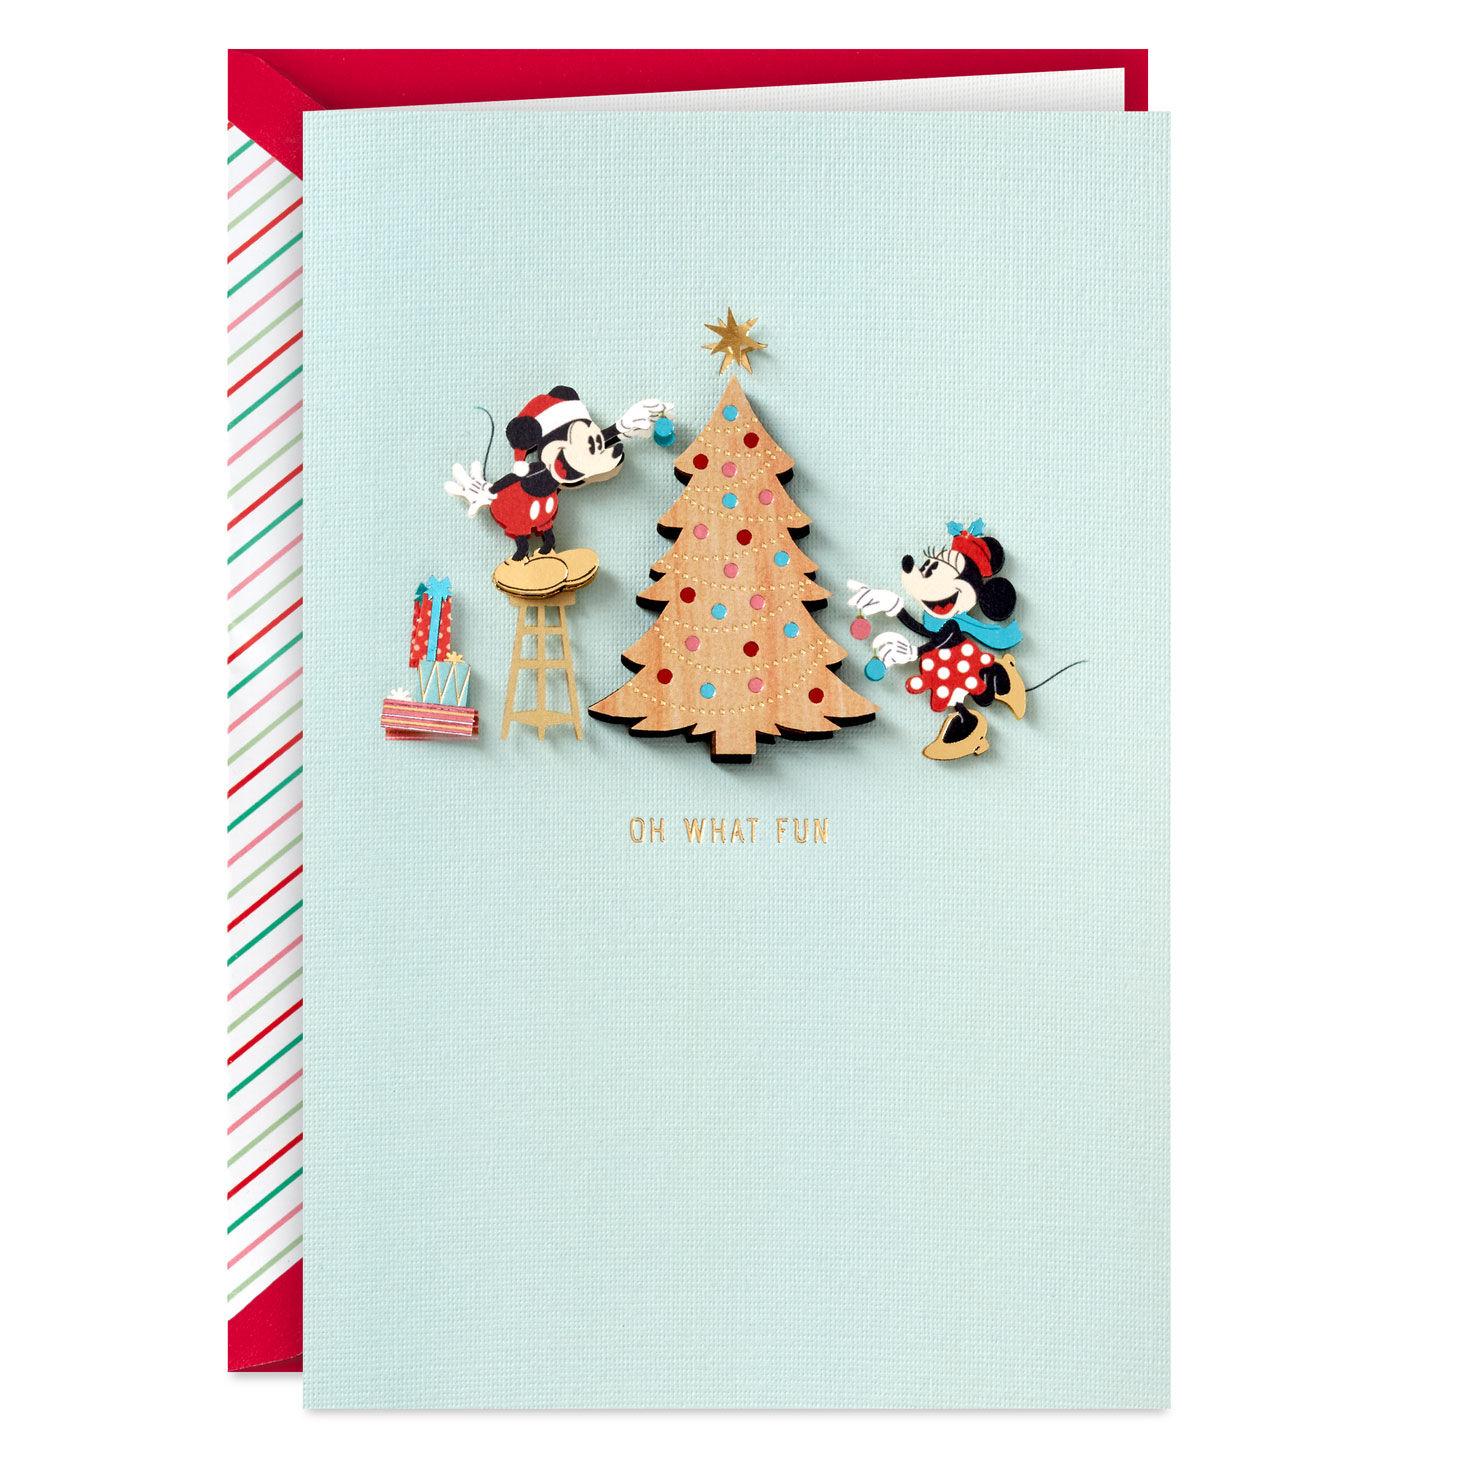 Disney Minnie Mouse Hallmark Red Box Ornament - Hooked on Hallmark